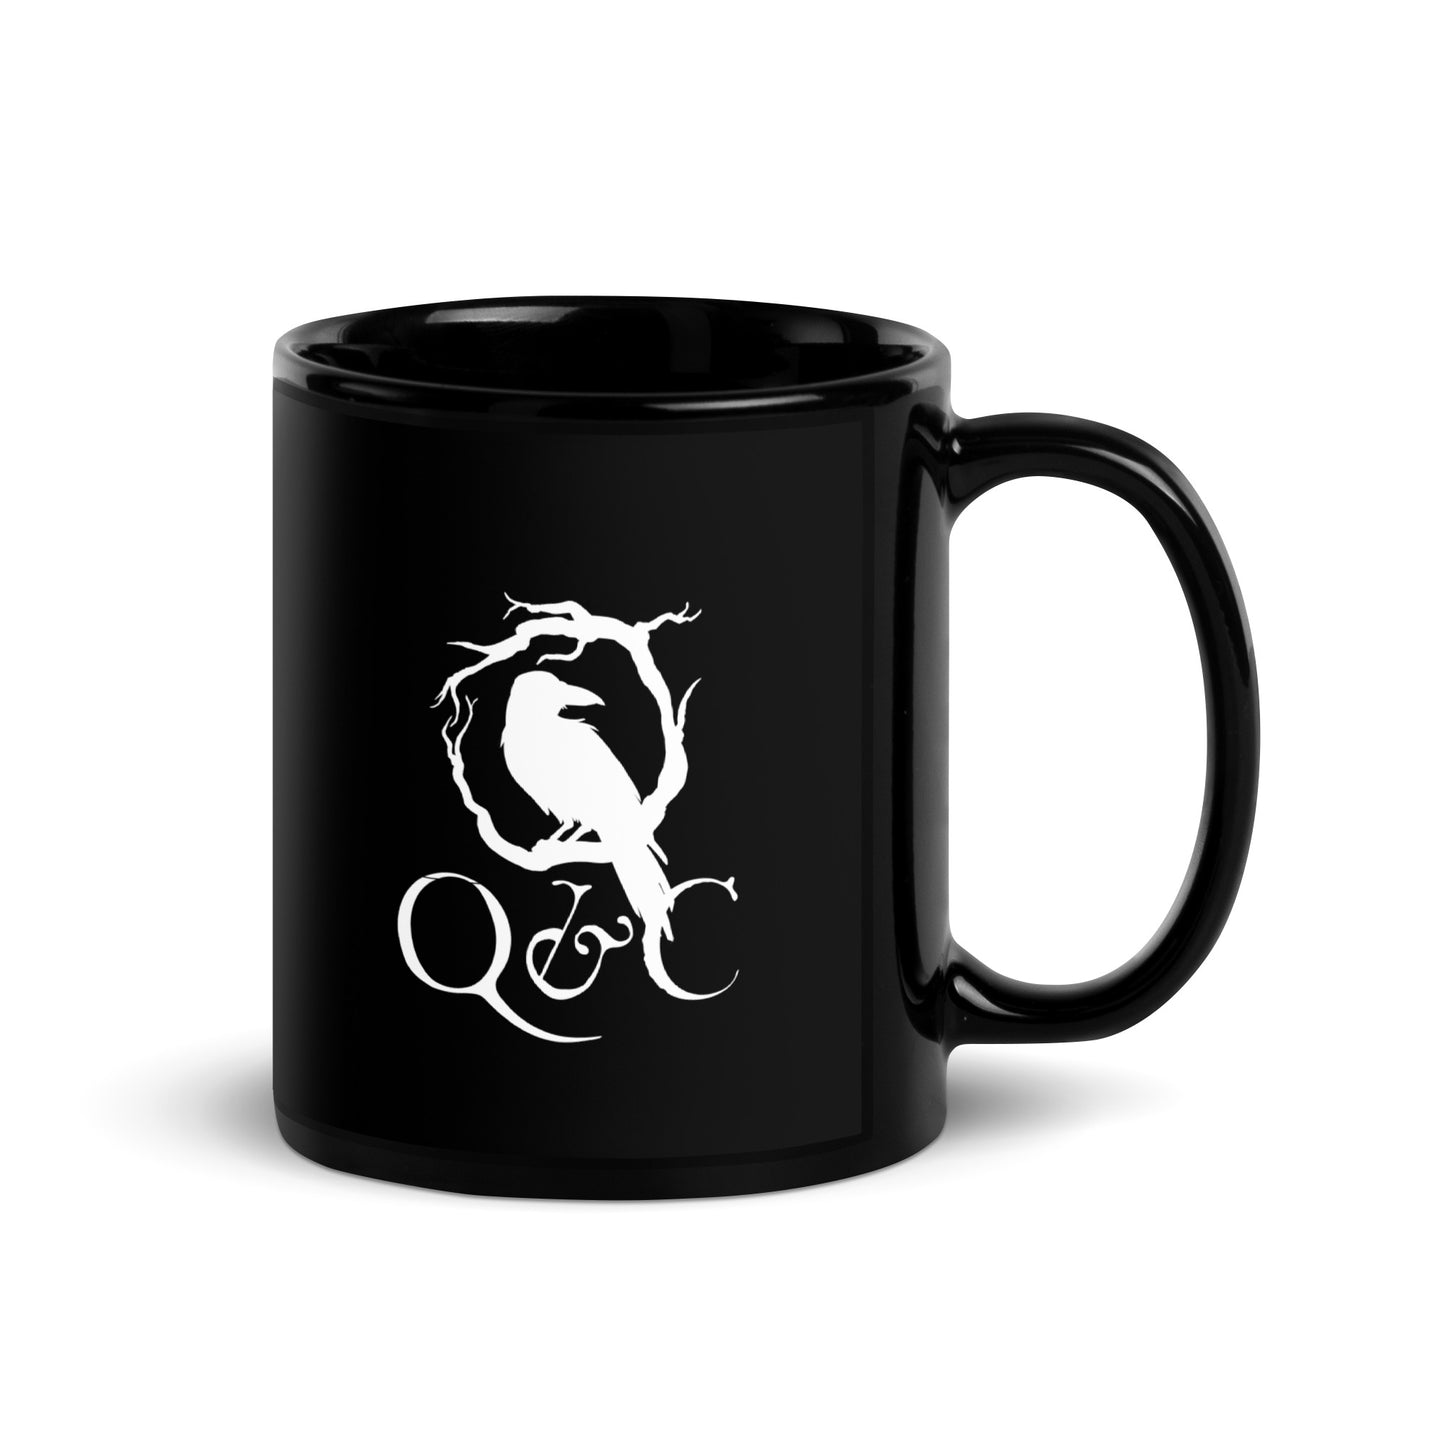 Q&C Glossy Black Mug